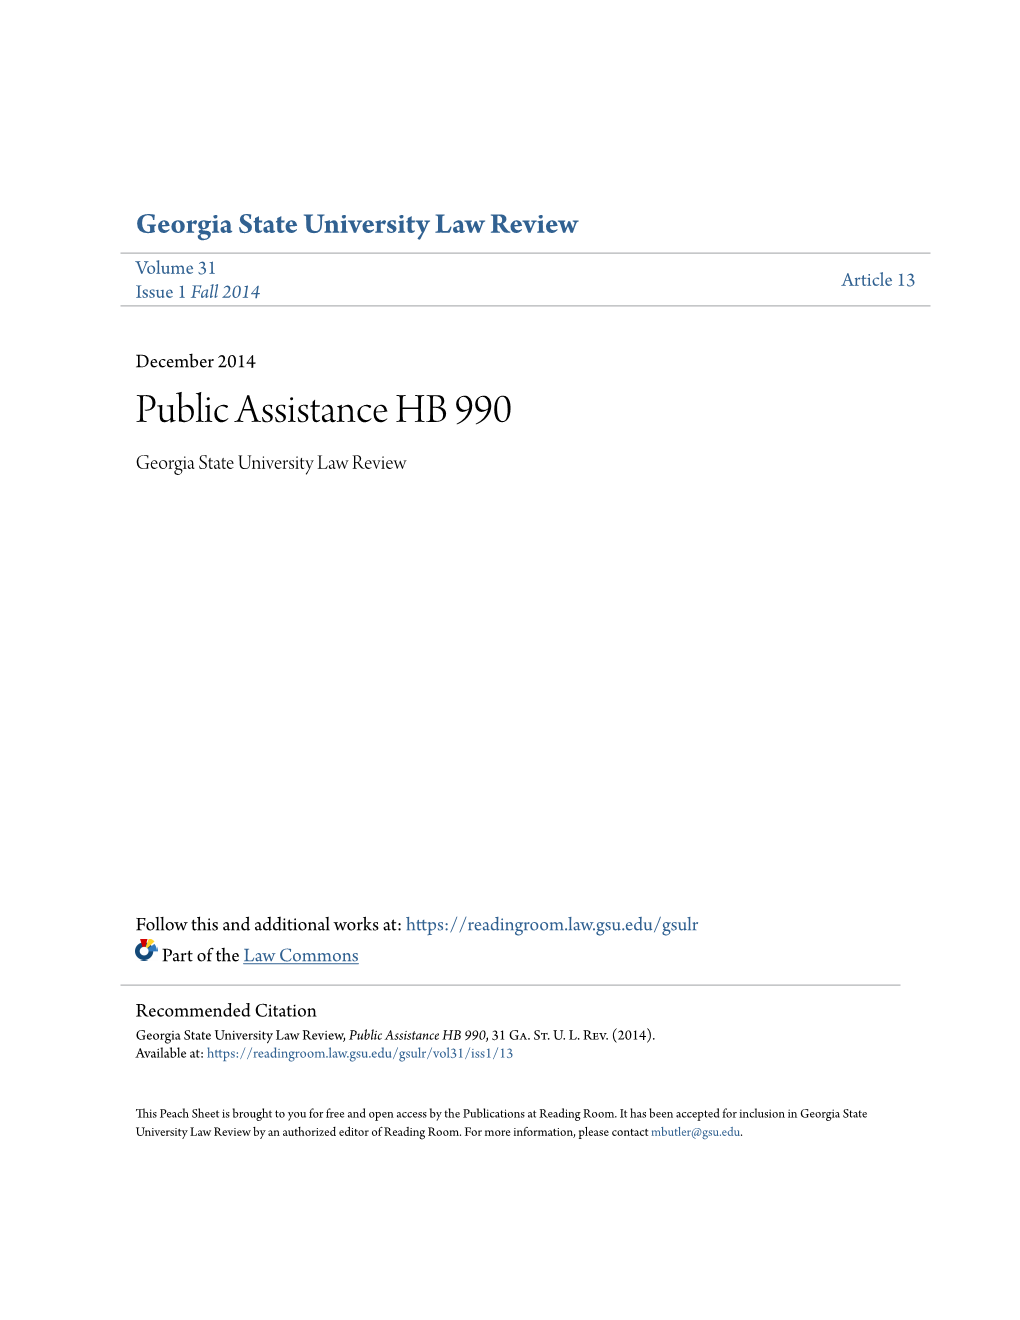 Public Assistance HB 990 Georgia State University Law Review